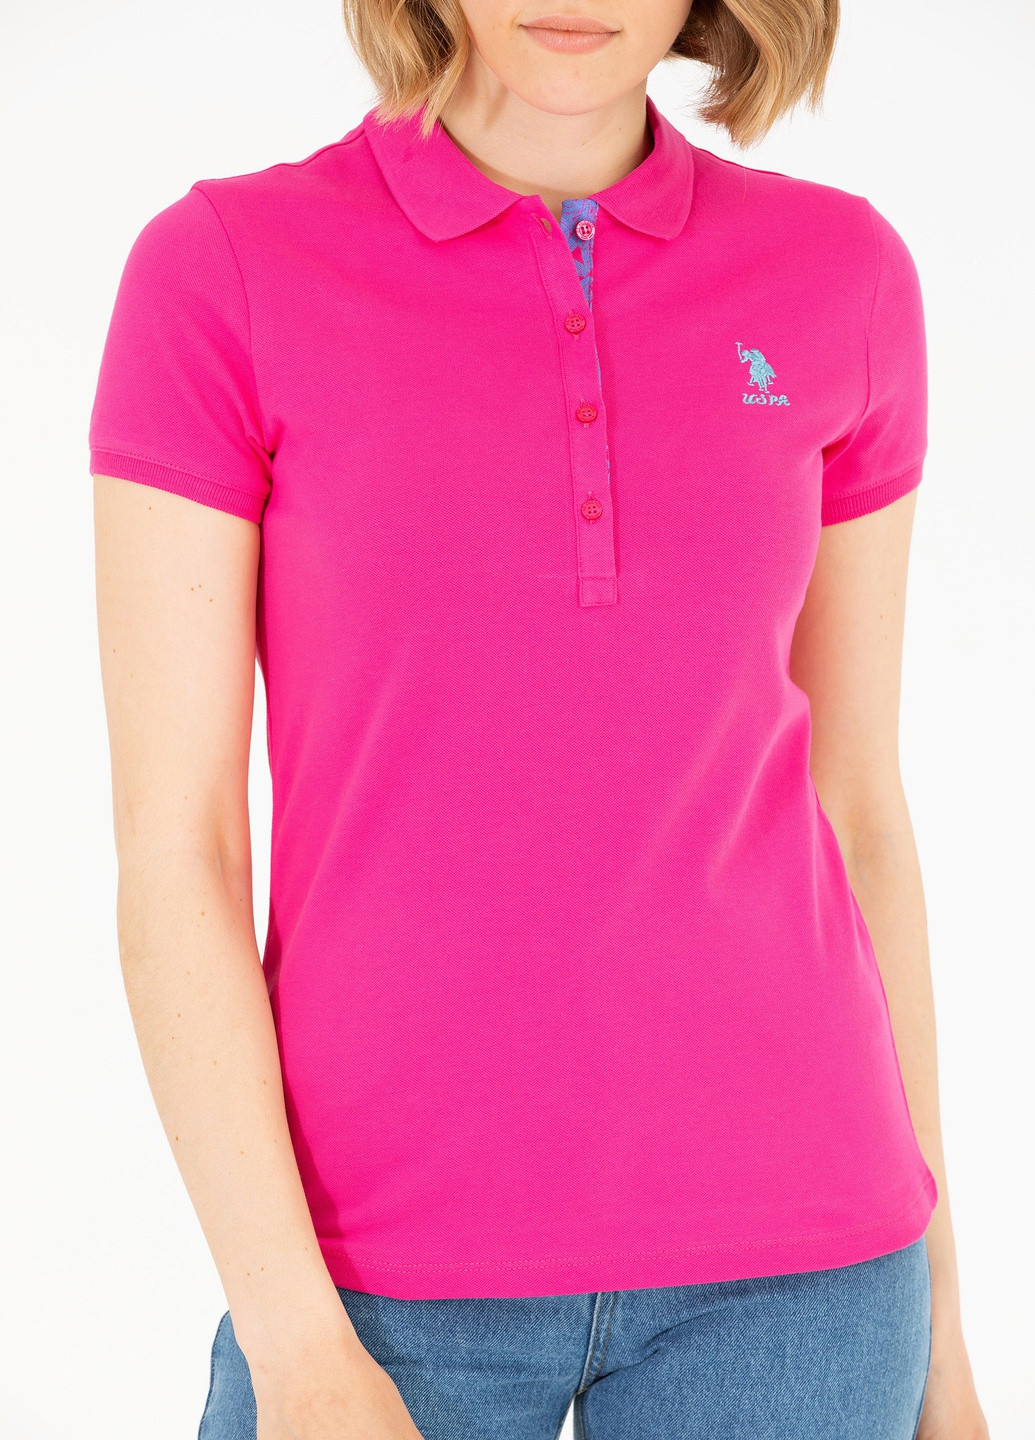 Кислотно-розовая женская футболка-футболка u.s.polo assn женская U.S. Polo Assn.